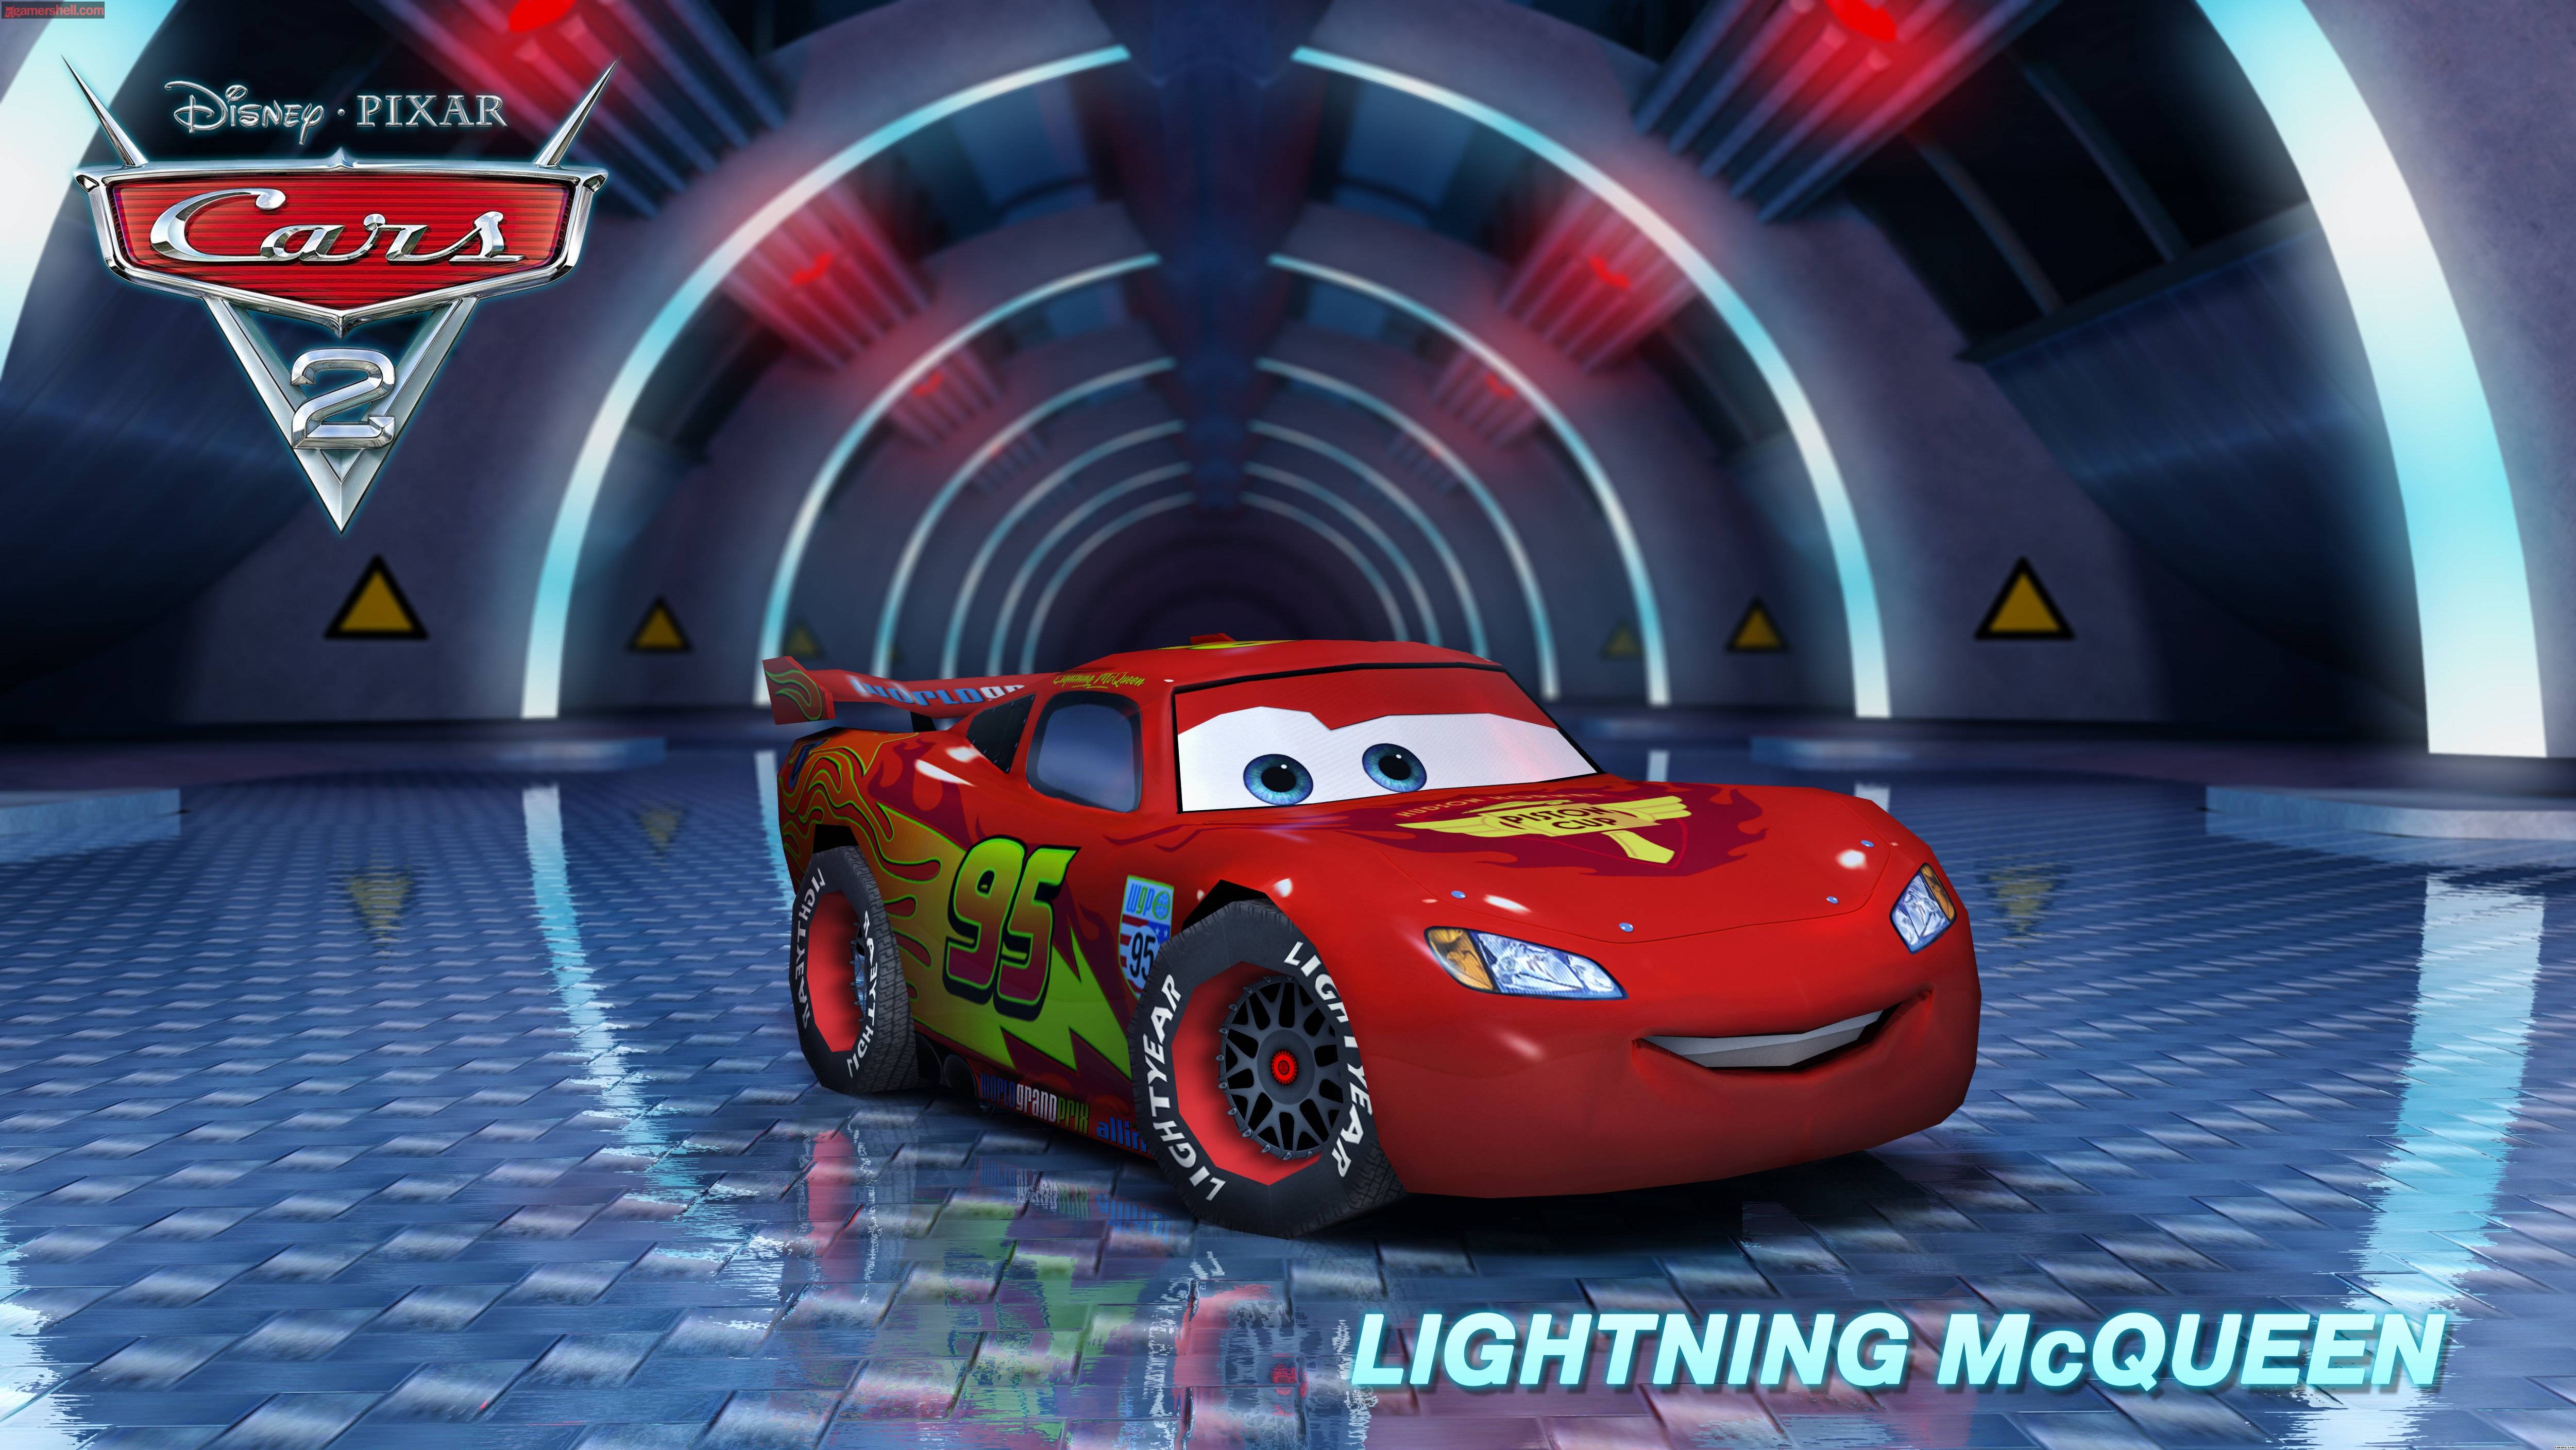 Movies Lightning McQueen in Cars 2 wallpaper Desktop, Phone